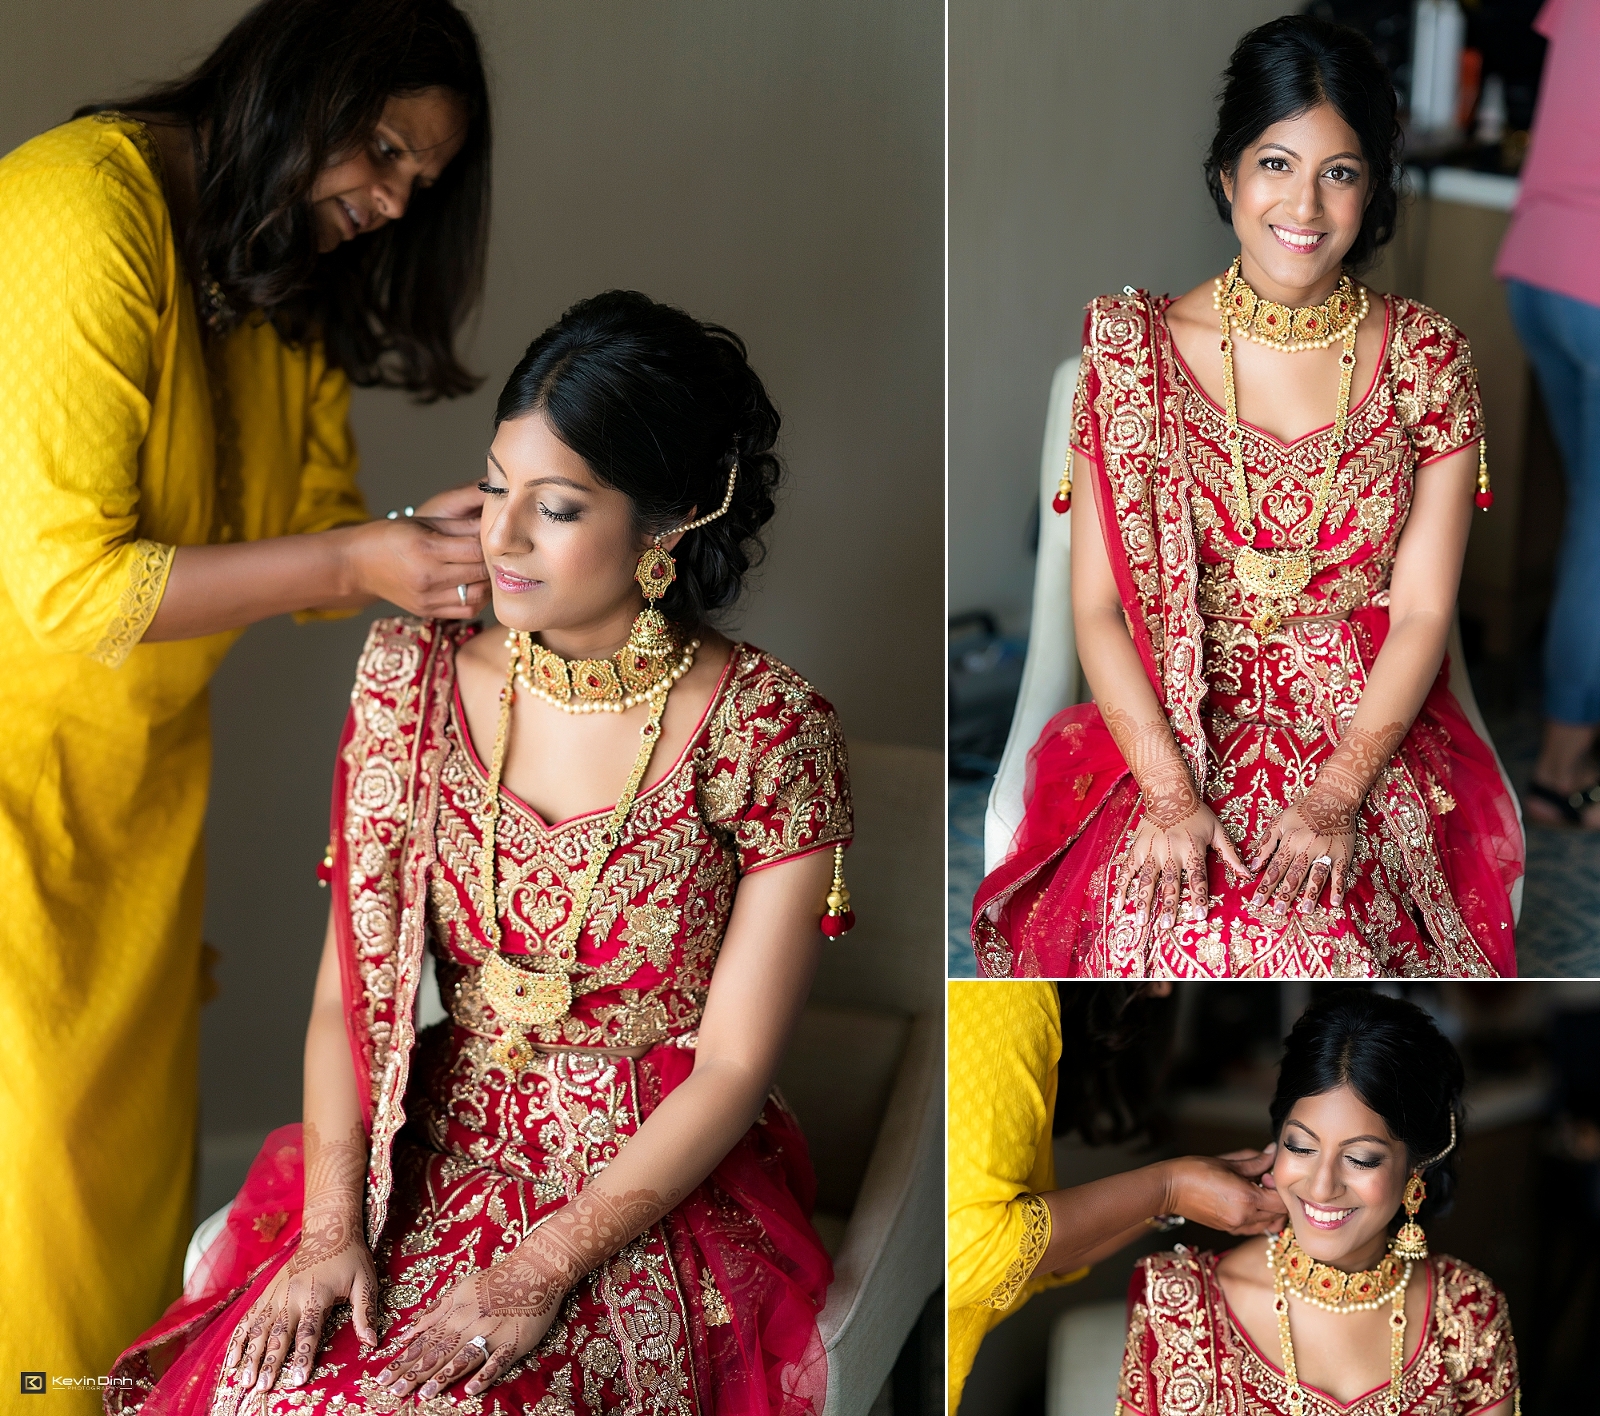 Indian bride preparation at Hilton Santa Barbara